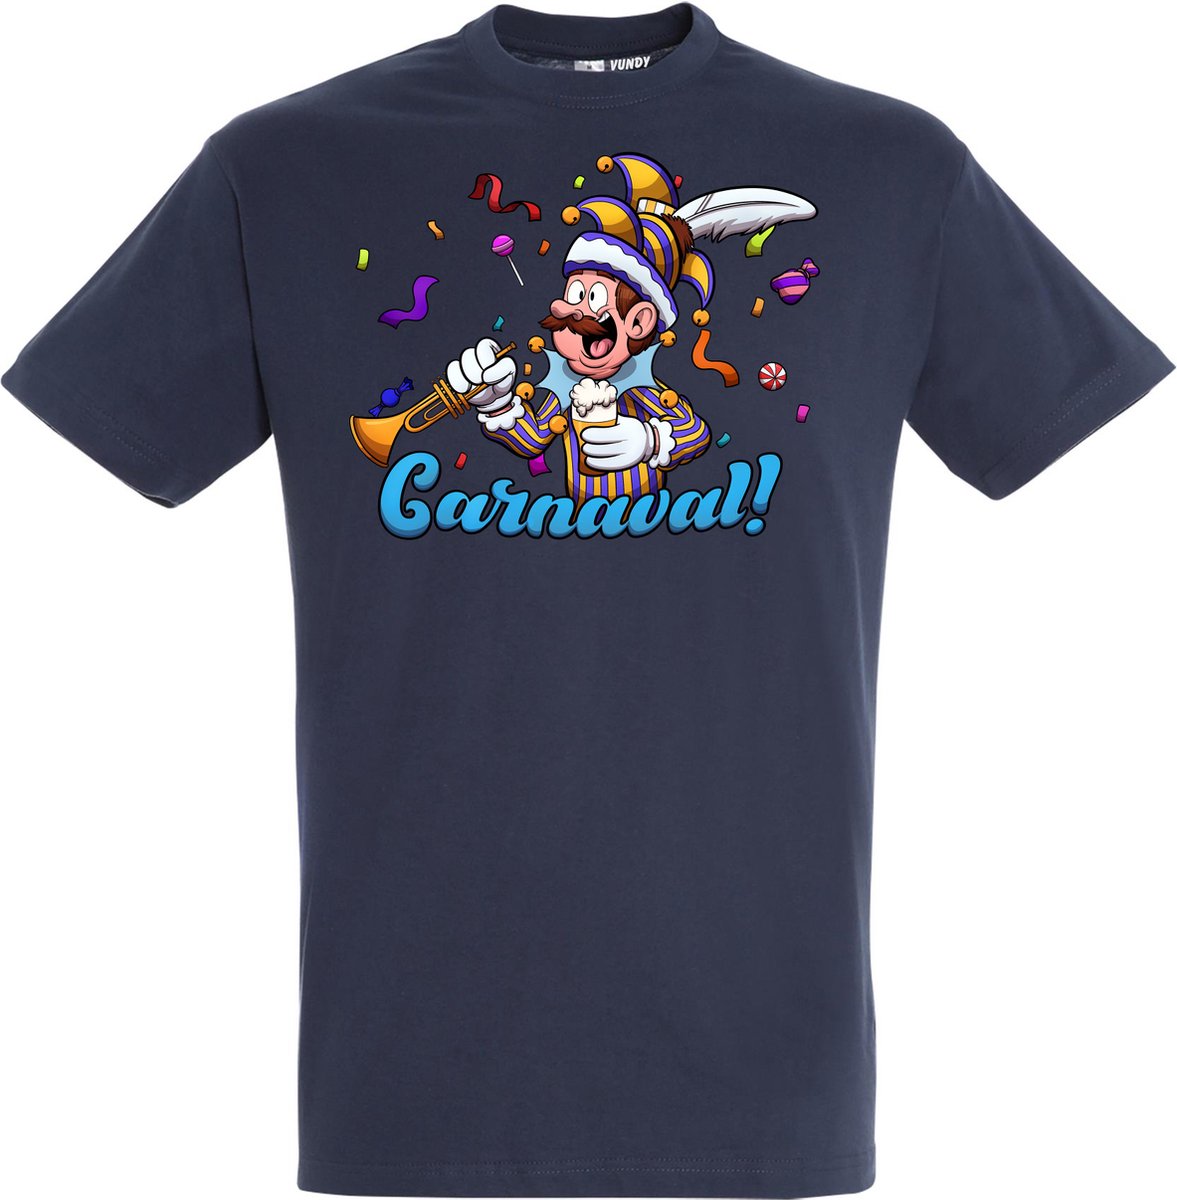 T-shirt kinderen Carnavalluh | Carnaval | Carnavalskleding Kinderen Baby | Navy | maat 92